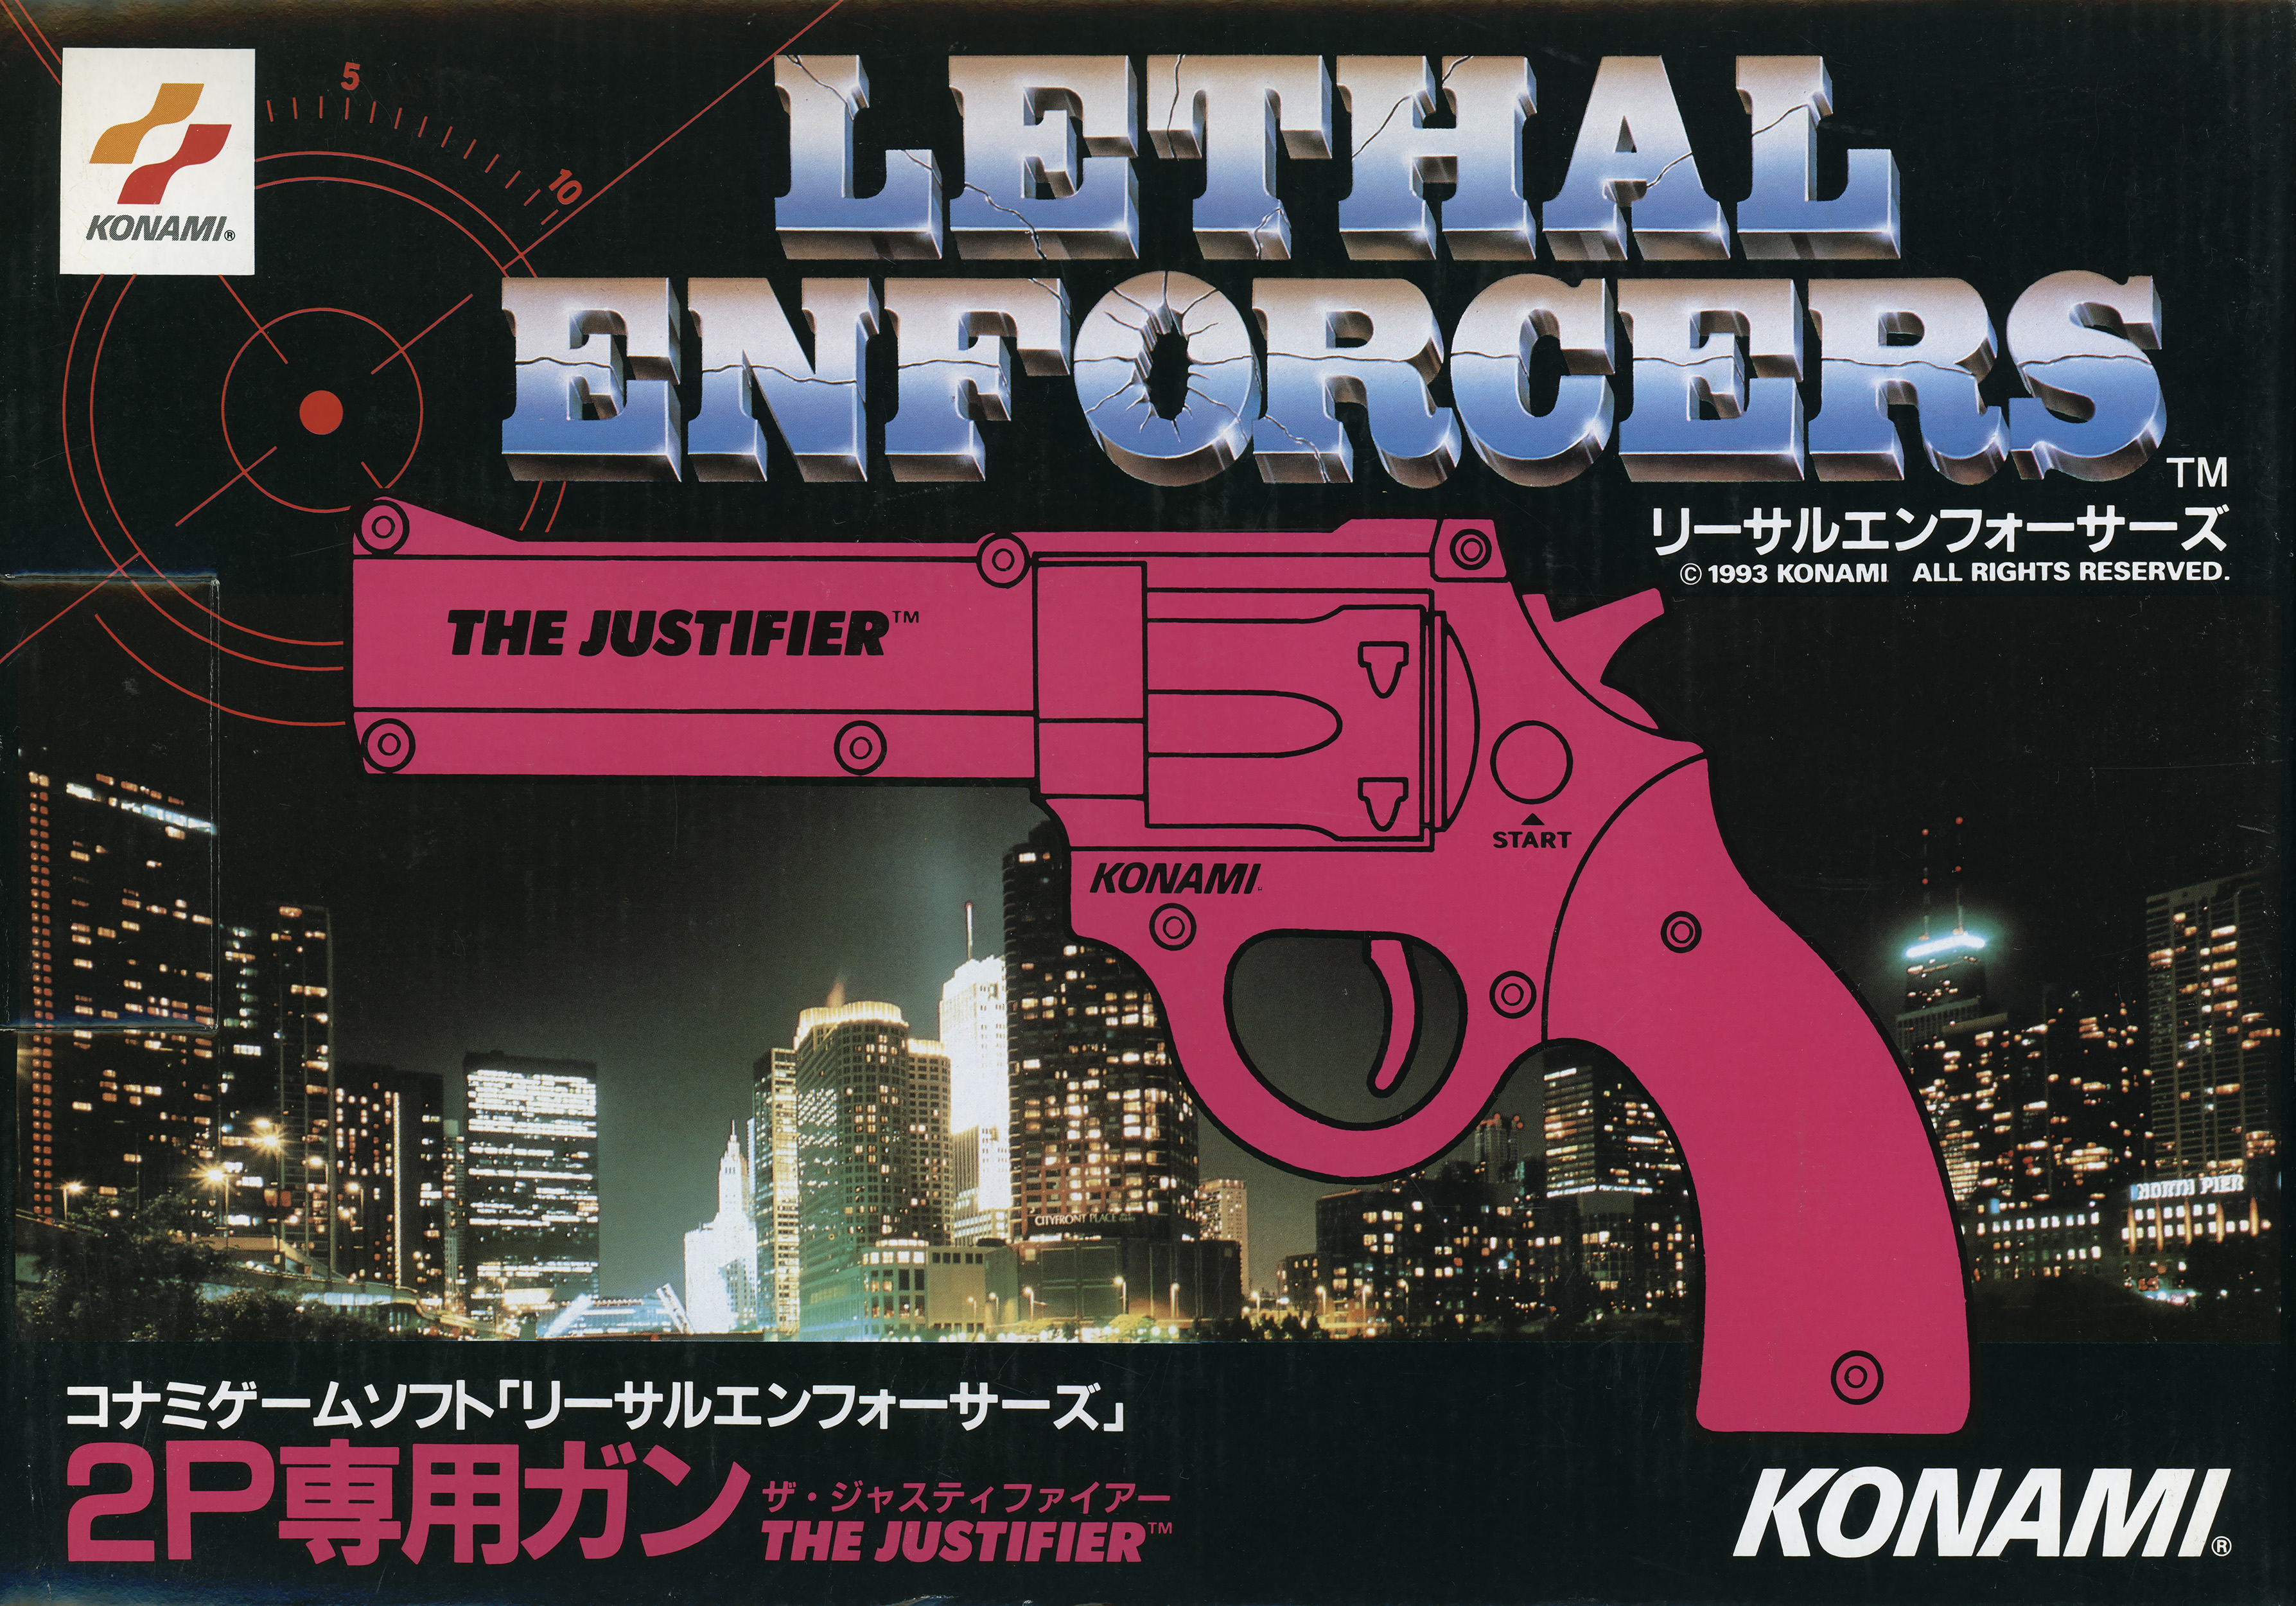 Lethal company items. Игра Sega Lethal Enforcers. Lethal Enforcers 2 Sega. Sega Mega Drive аксессуар justifier. Lethal Enforcers II - Gun Fighters Sega обложка.